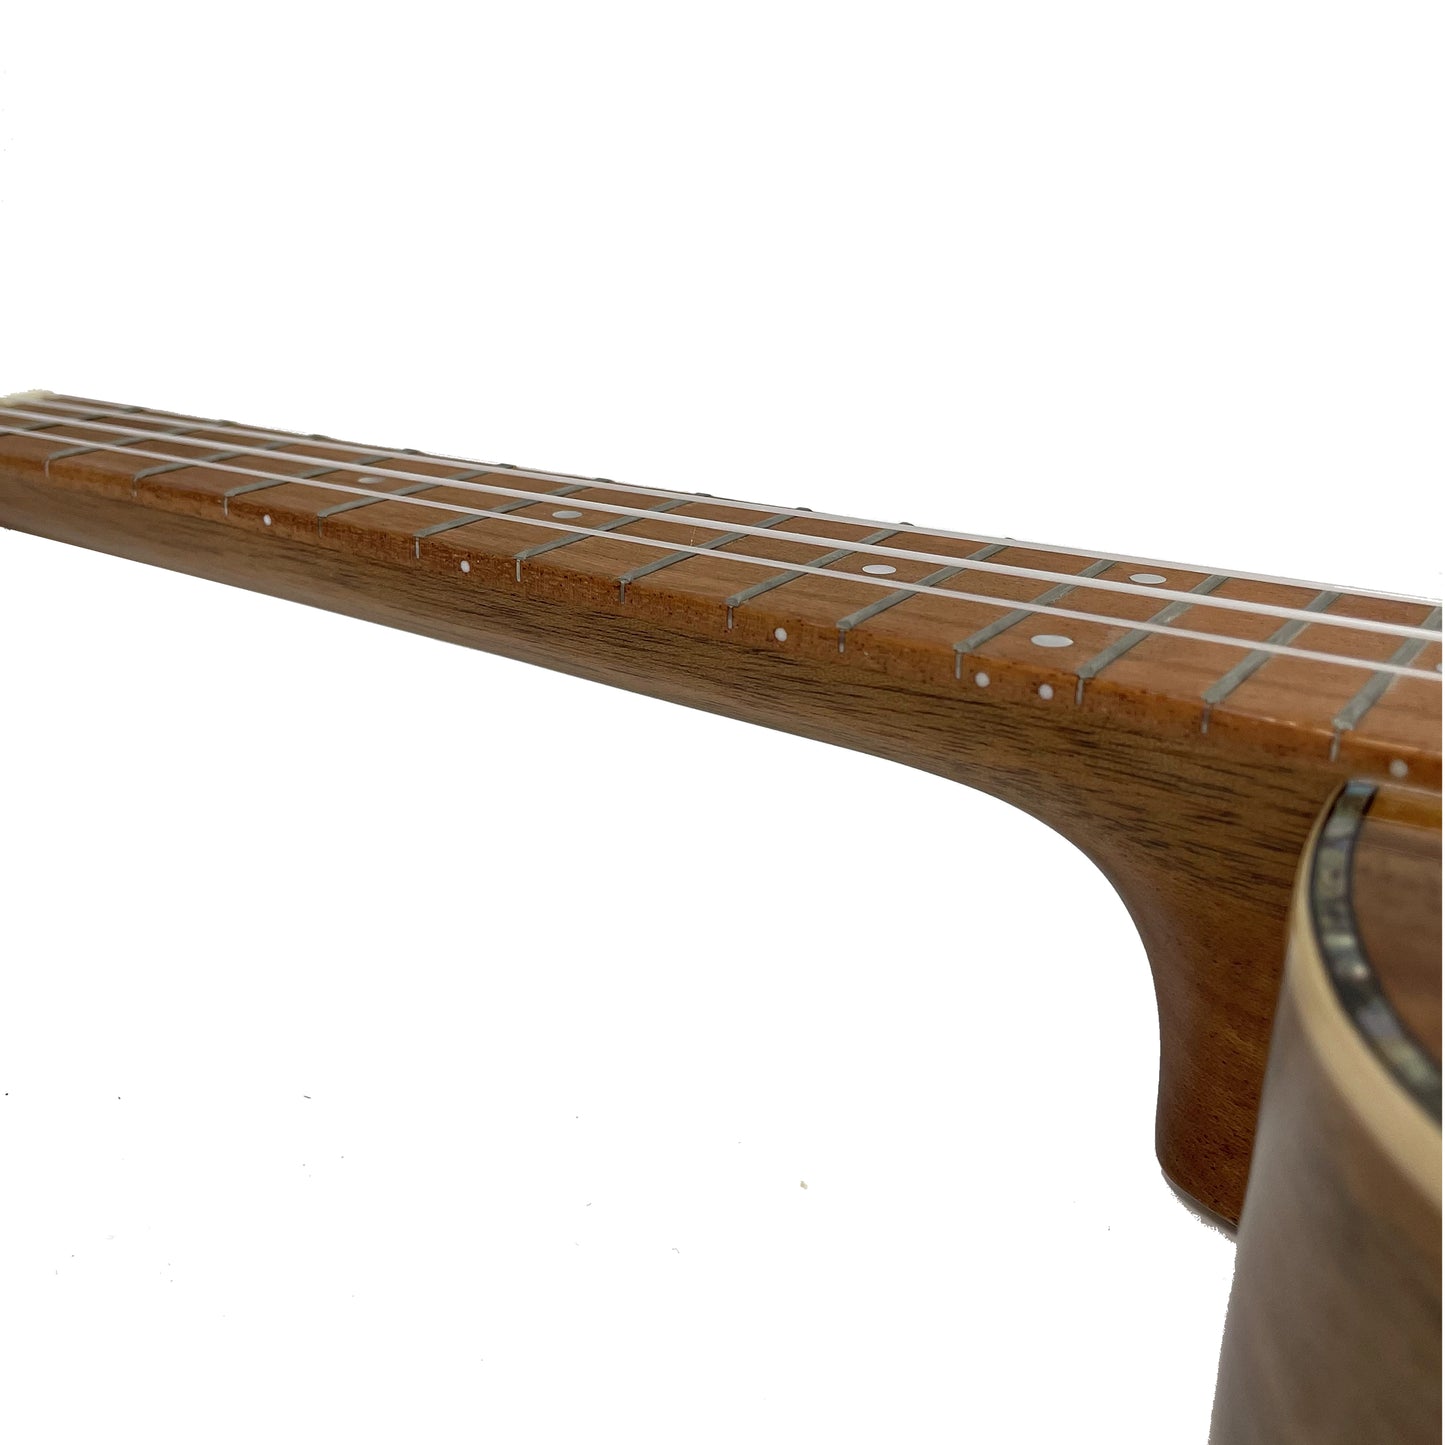 Kalena Performance Series All Solid Tenor Acacia Cutaway Armrest EQ Pickup Ukulele Complete Set: Strings, Picks, Strap, Digital Tuner, Padded Case, Starter Guide